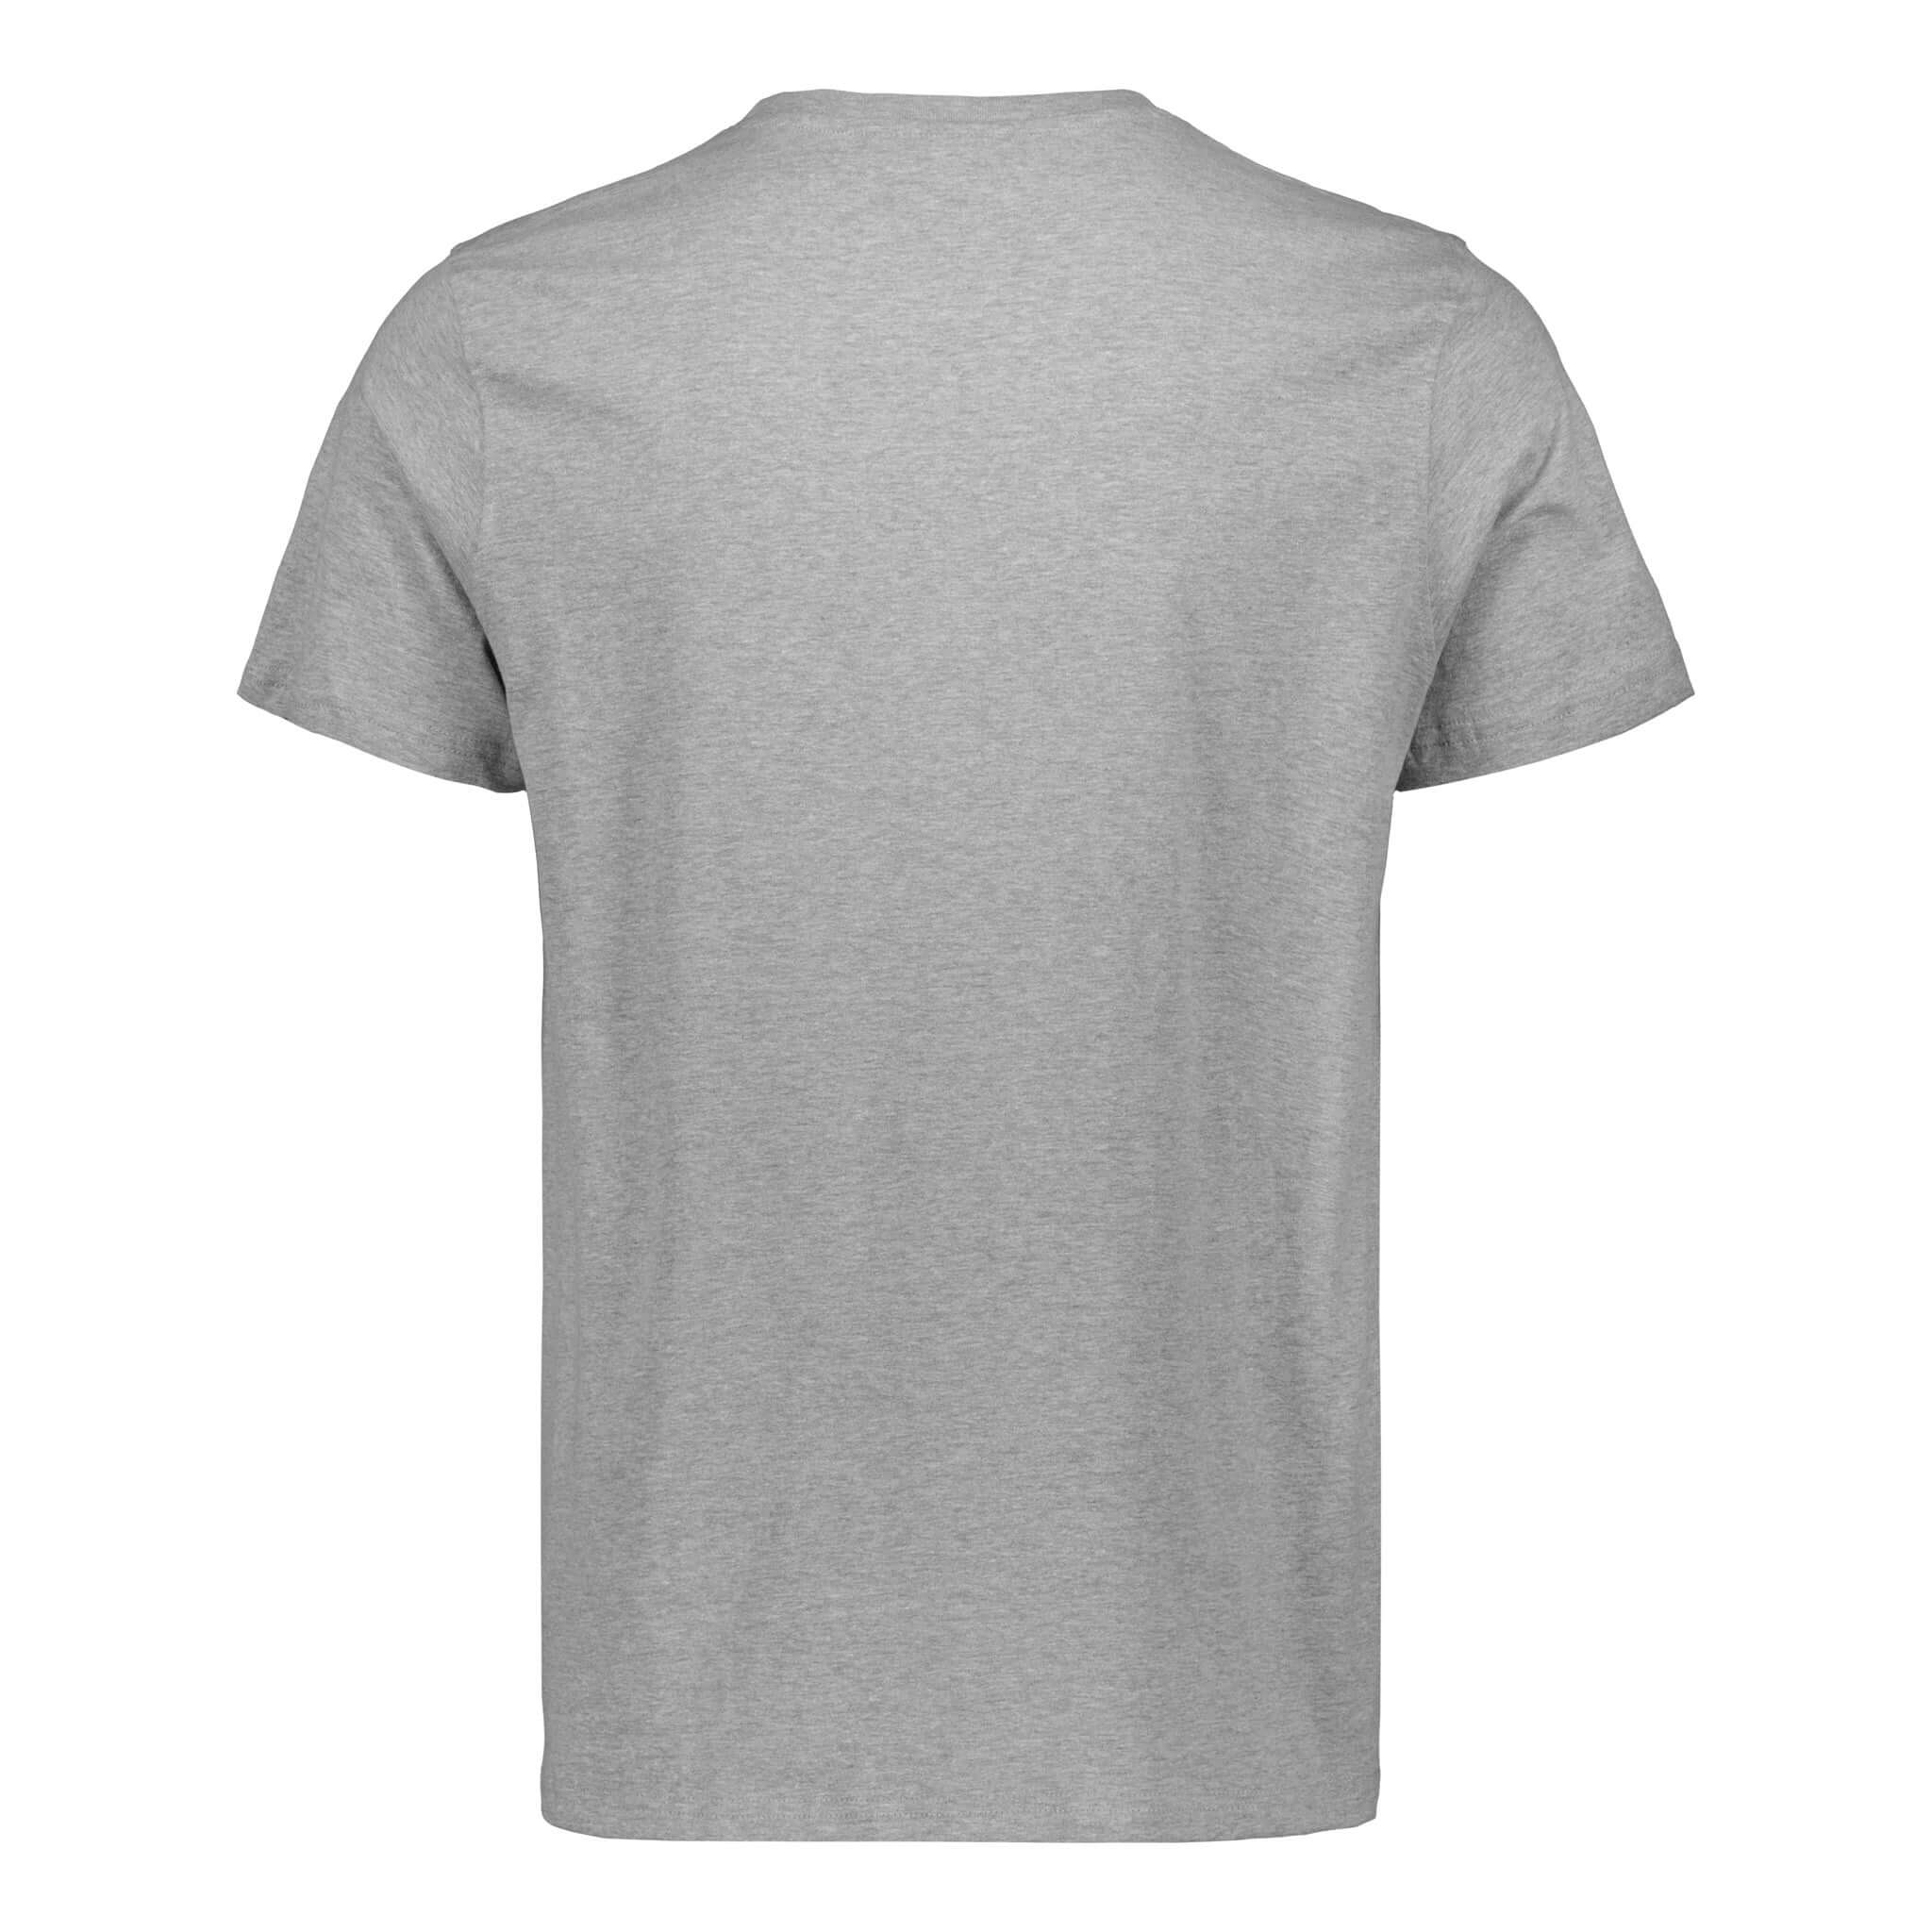 ENCELADUS T-Shirt Grey - ENCE Shop